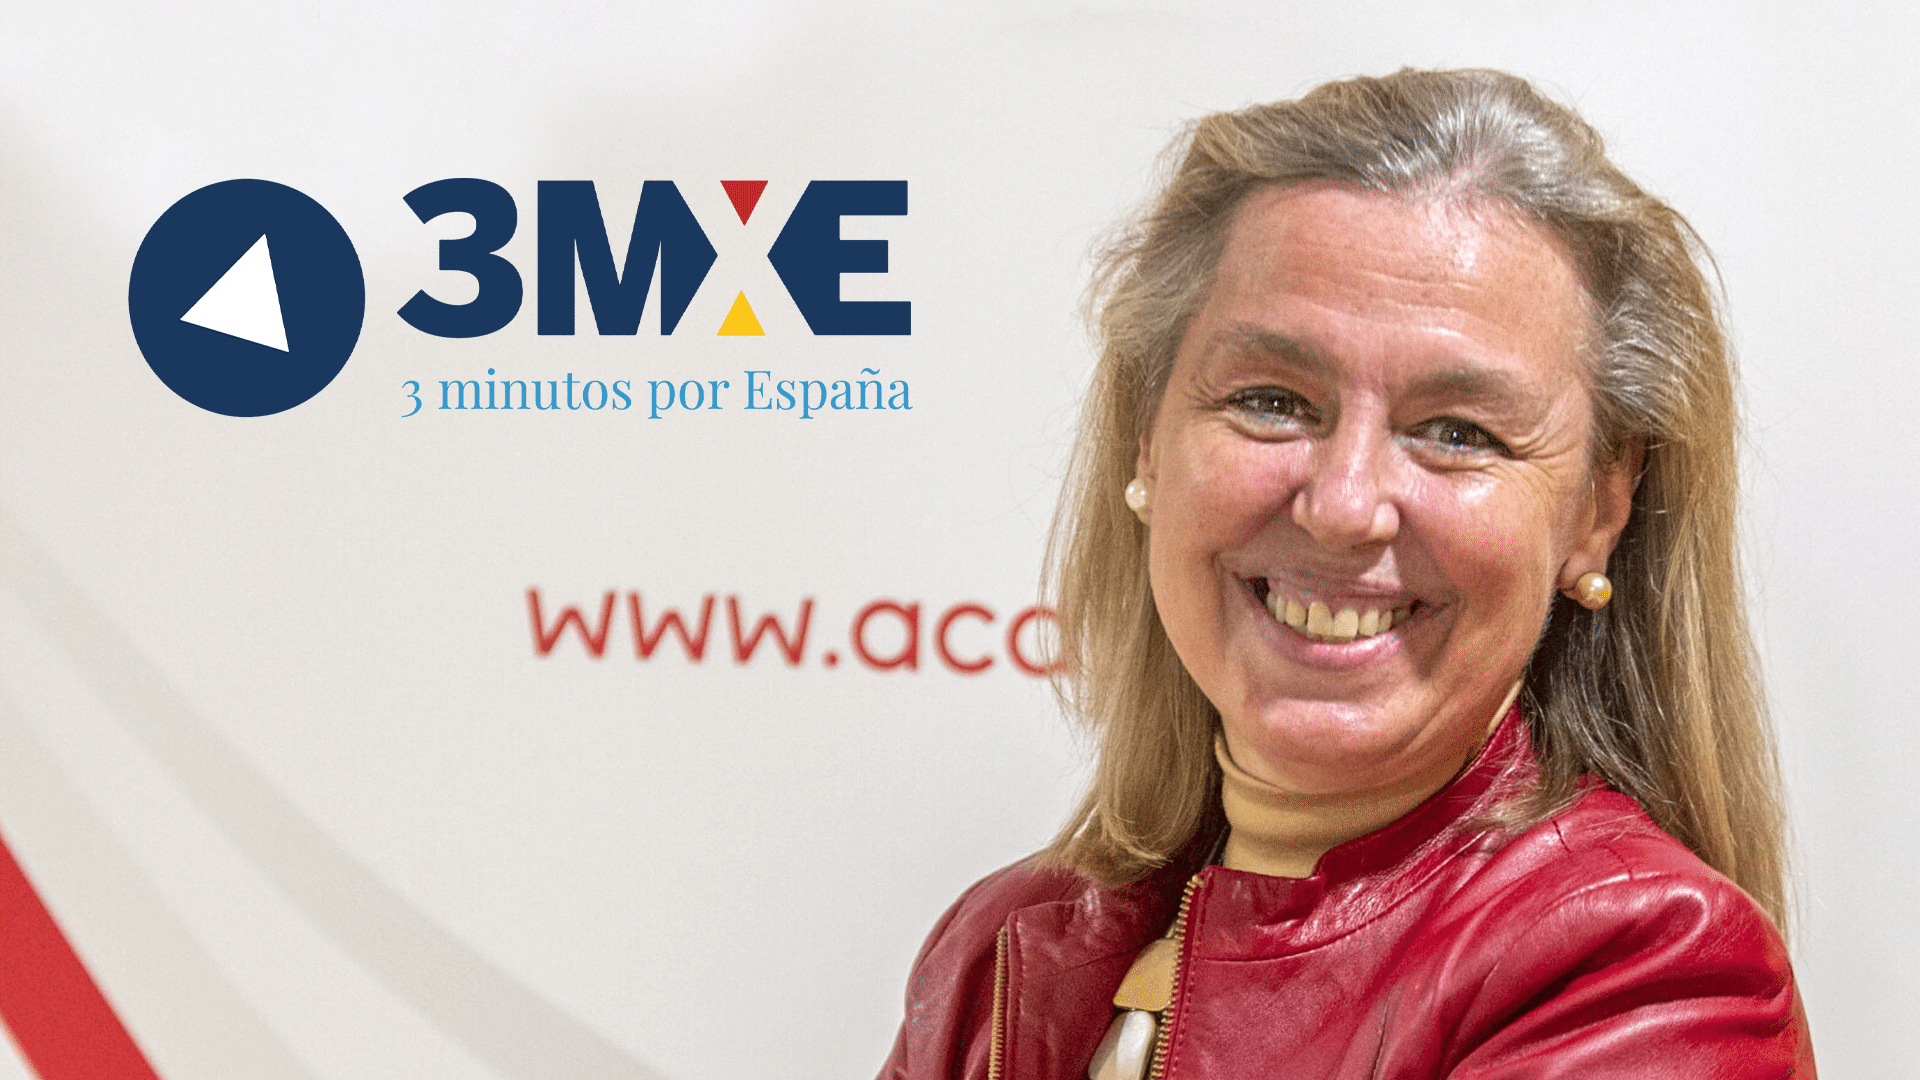 3MXE-006: Carmen Fernández de la Cigoña